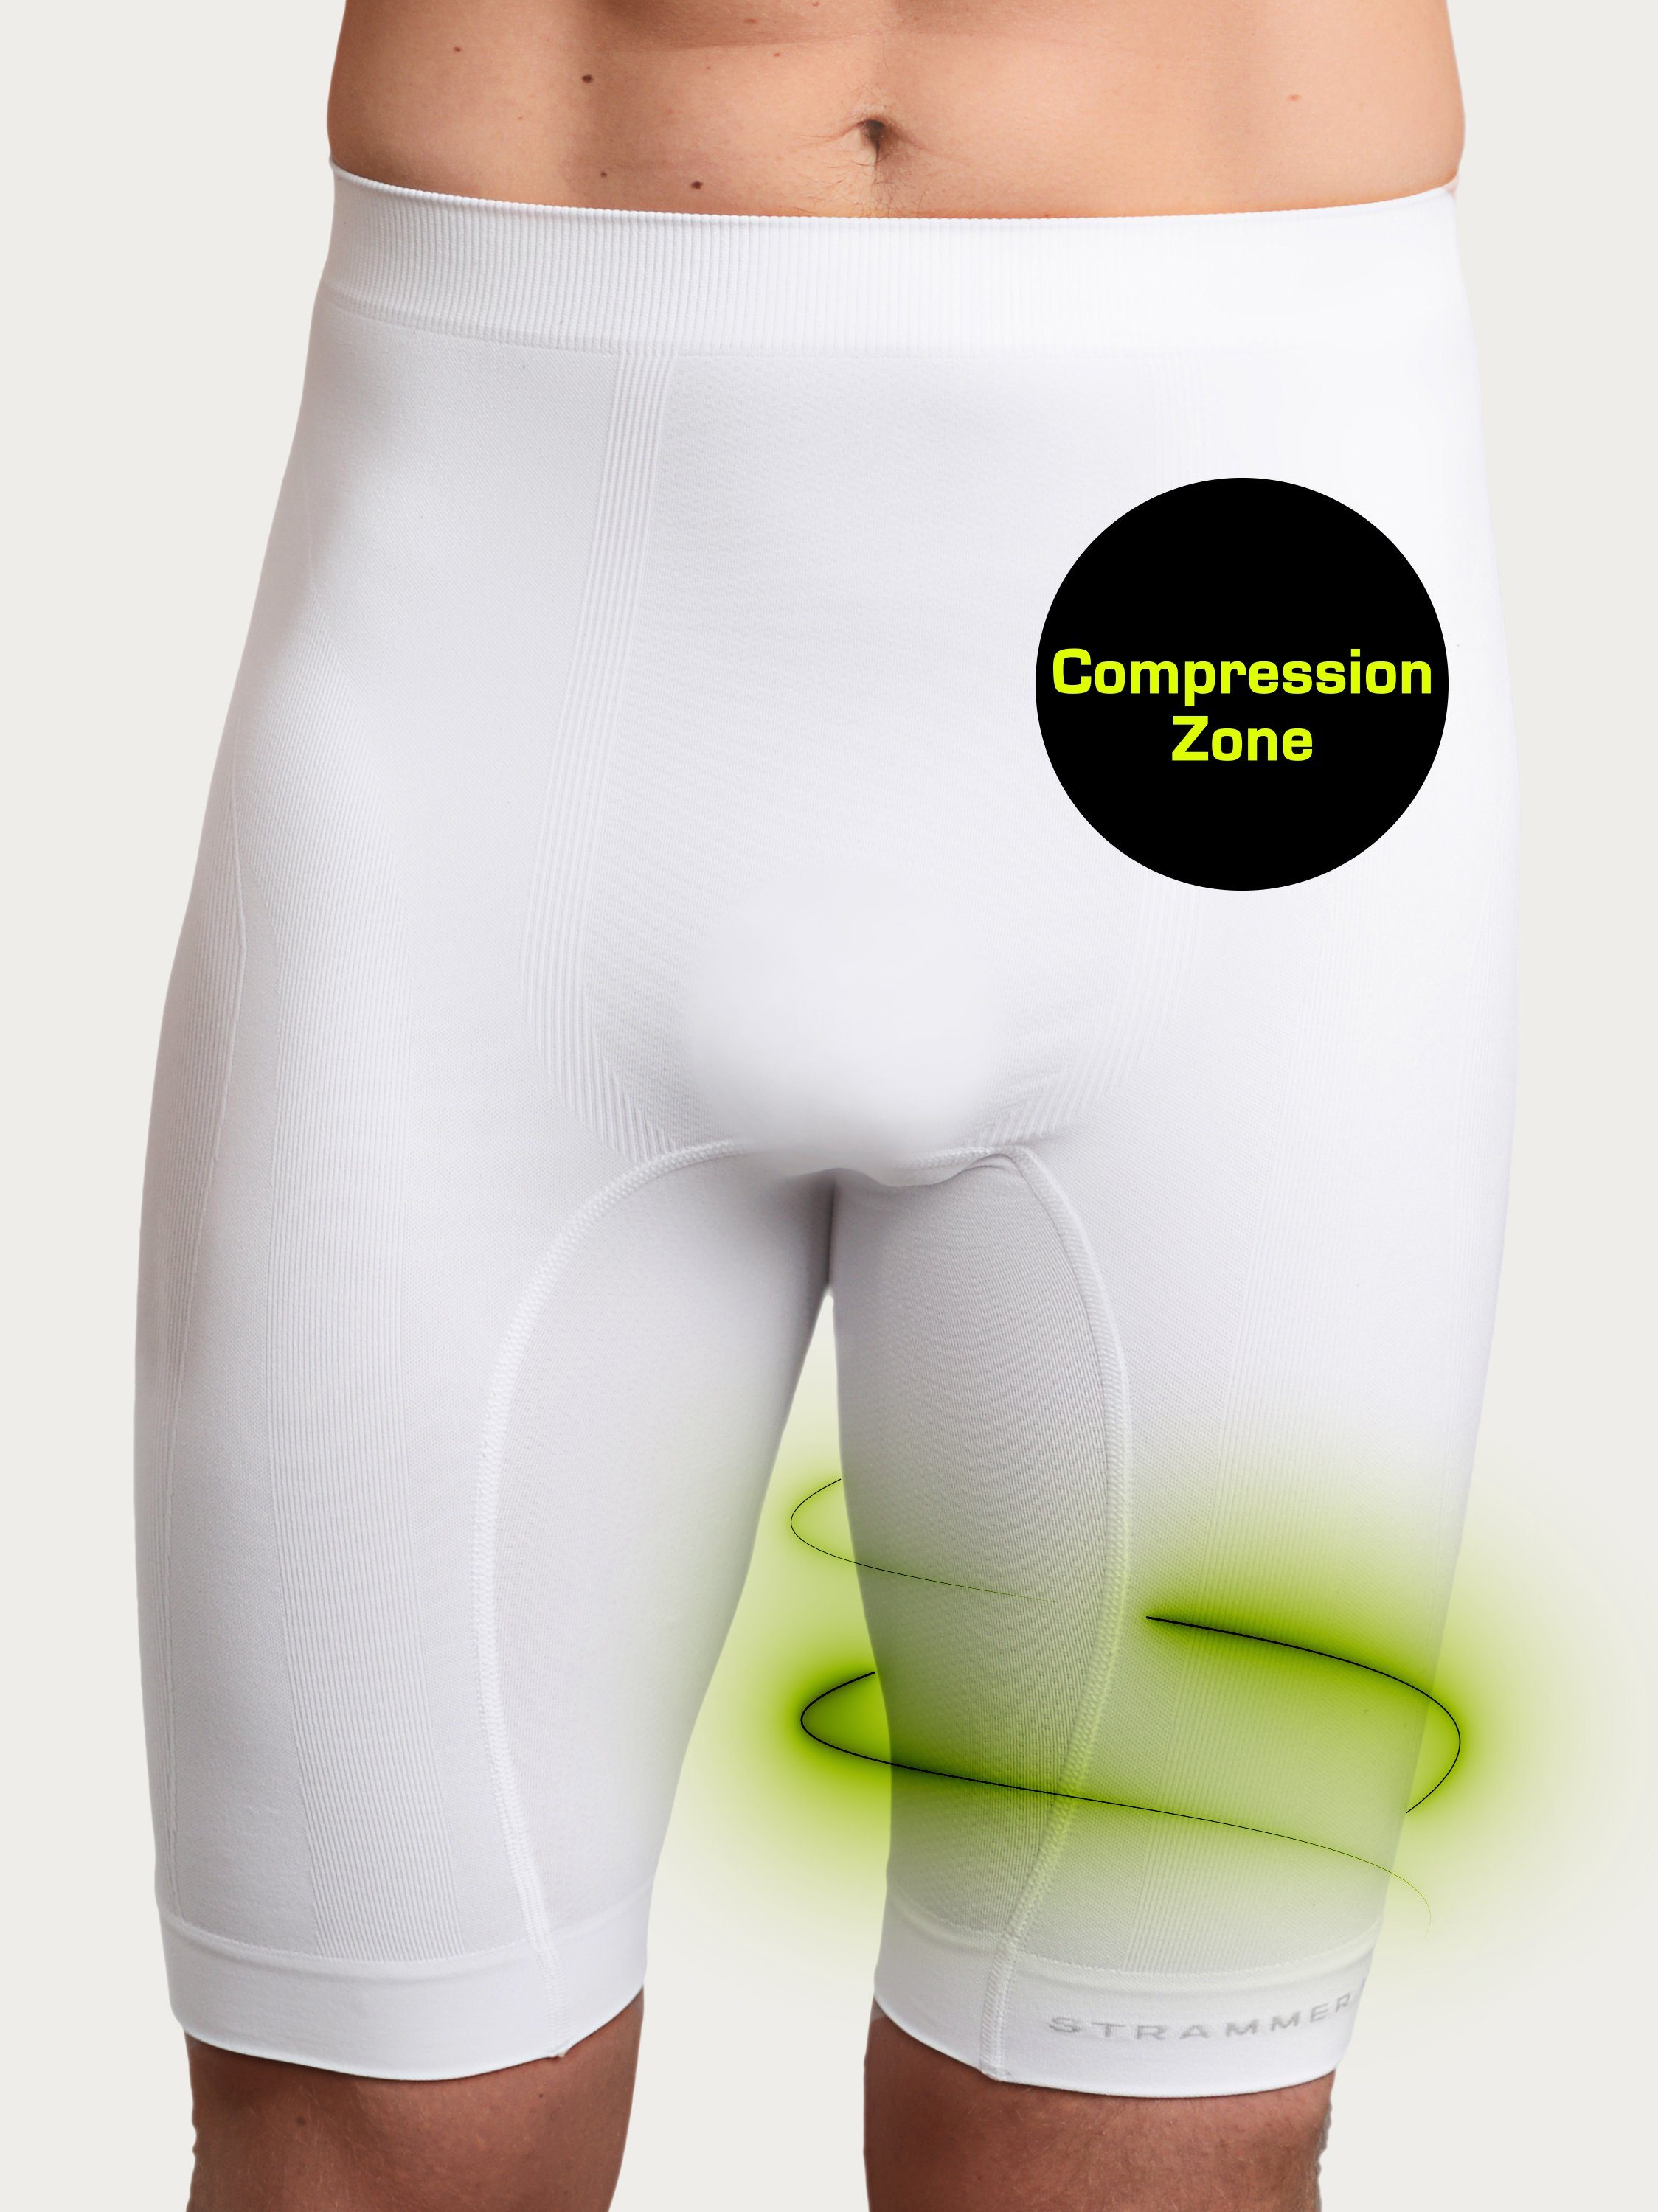 Strammer Max Shapewear, High Shorts Compression Trainingsshorts Weiß Performance® atmungsaktives Tech Gewebe